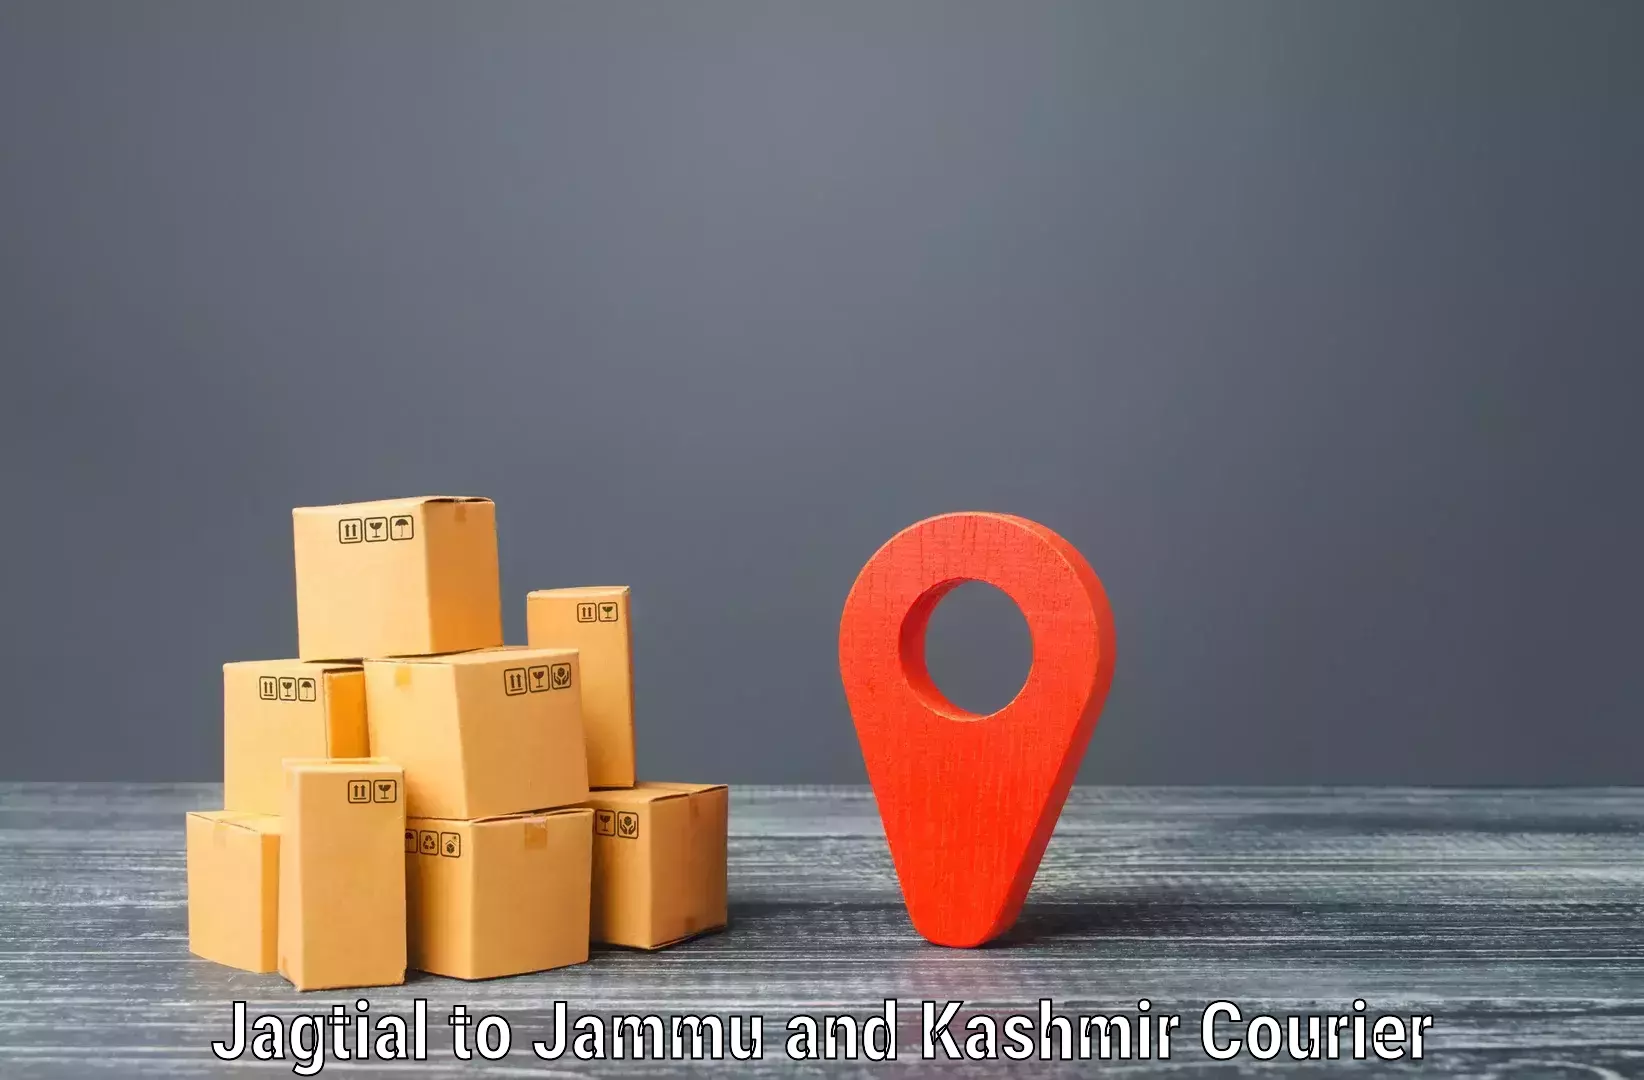 Customer-centric shipping Jagtial to Srinagar Kashmir